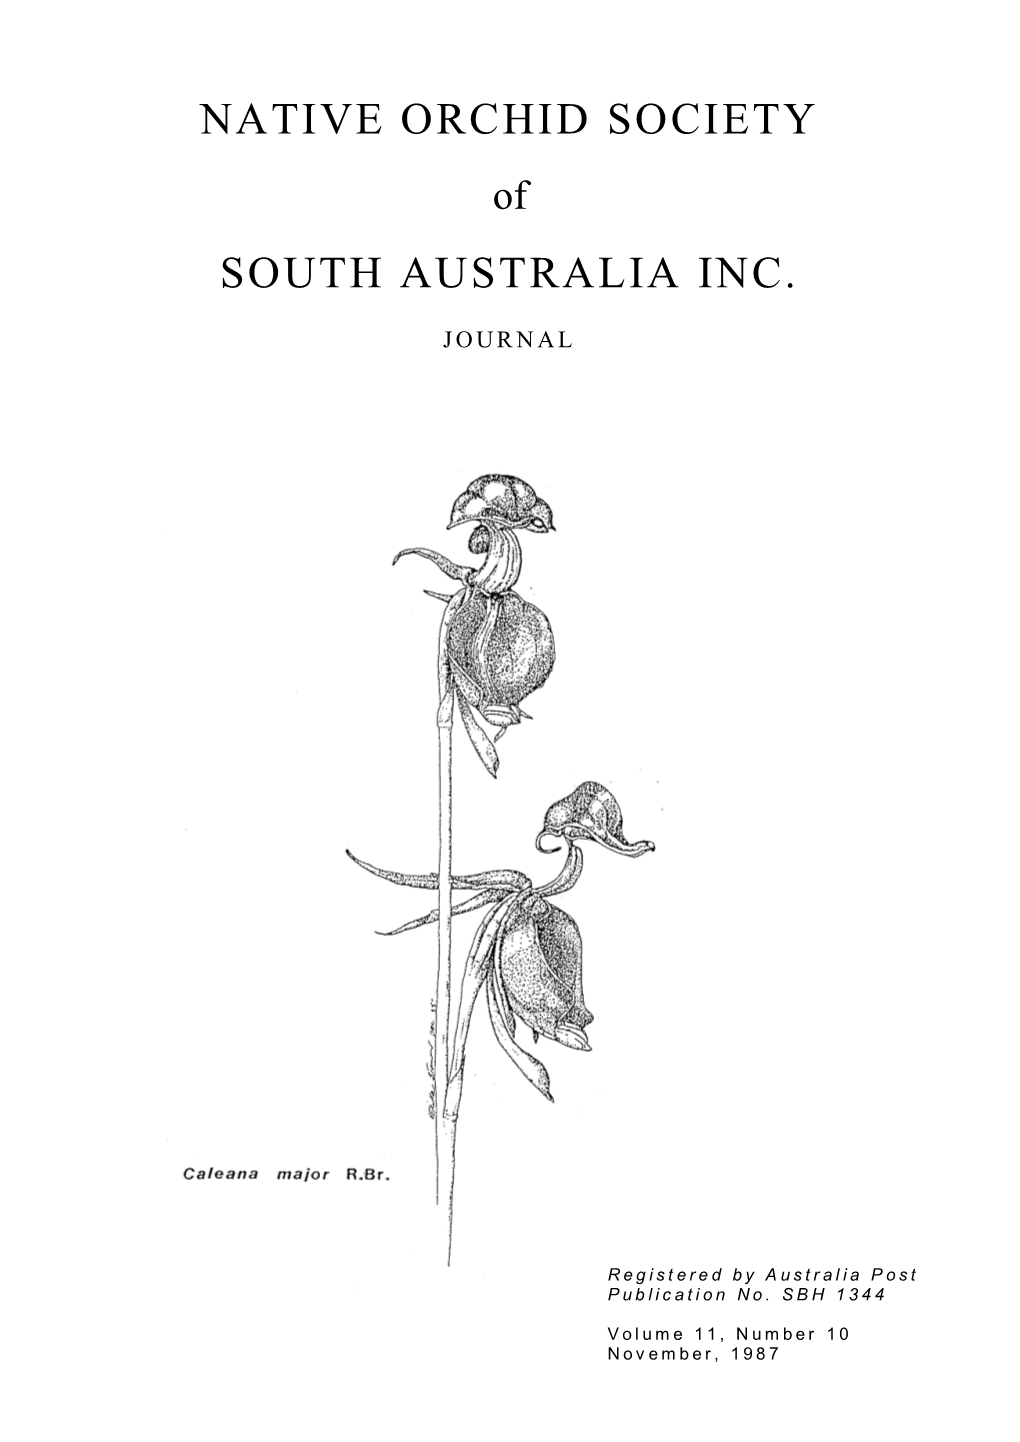 Native Orchid Society South Australia Inc